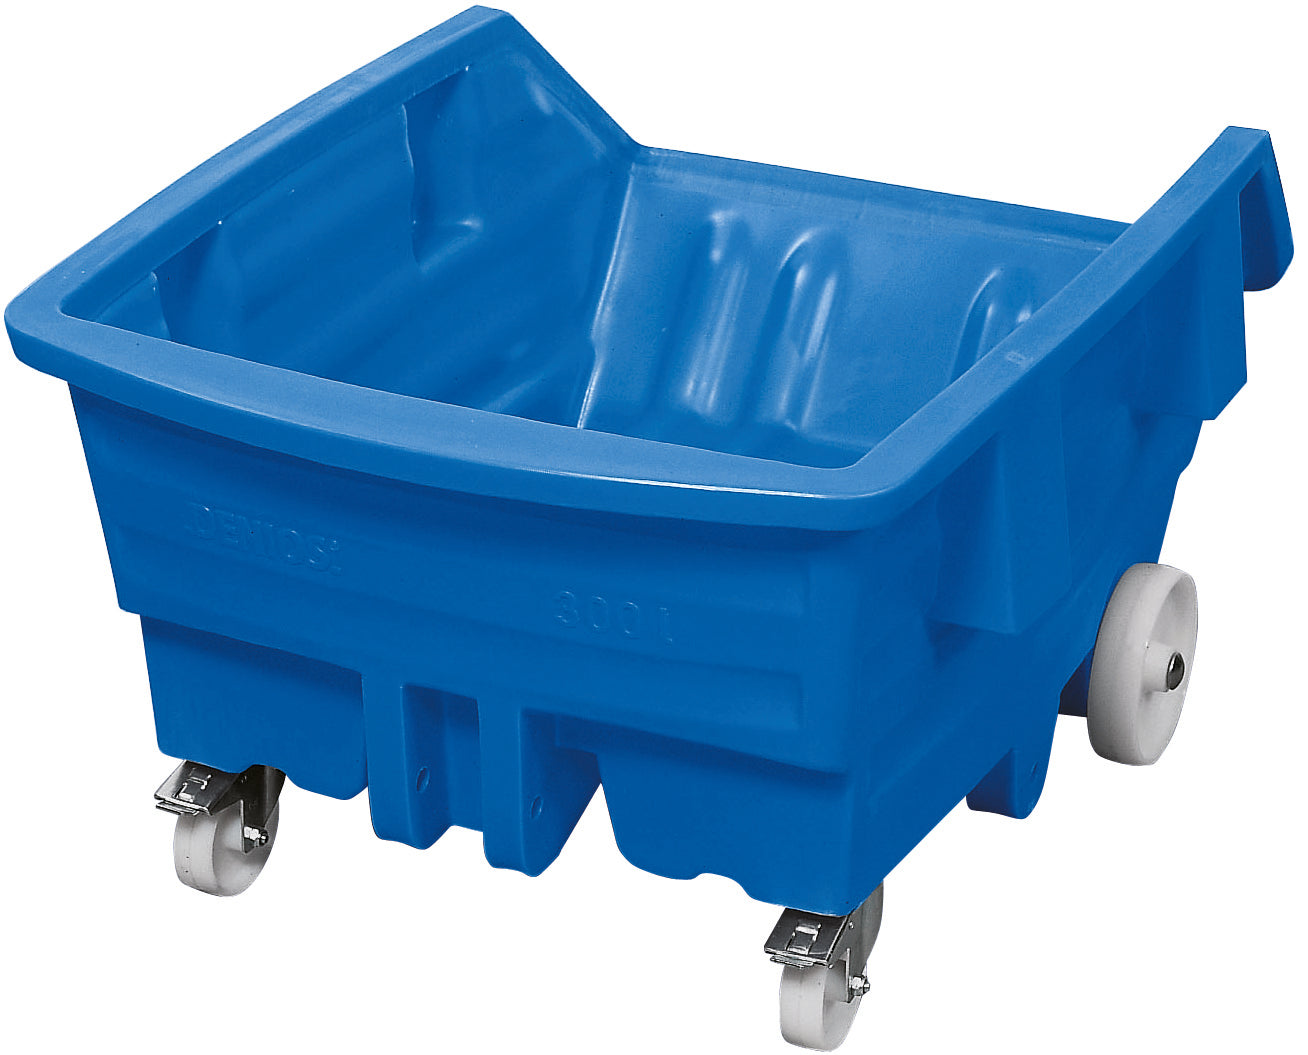 Wagonnet à bascule en polyéthylène bleu avec roulettes, 750 litres, 1560x925x1150, polyéthylène